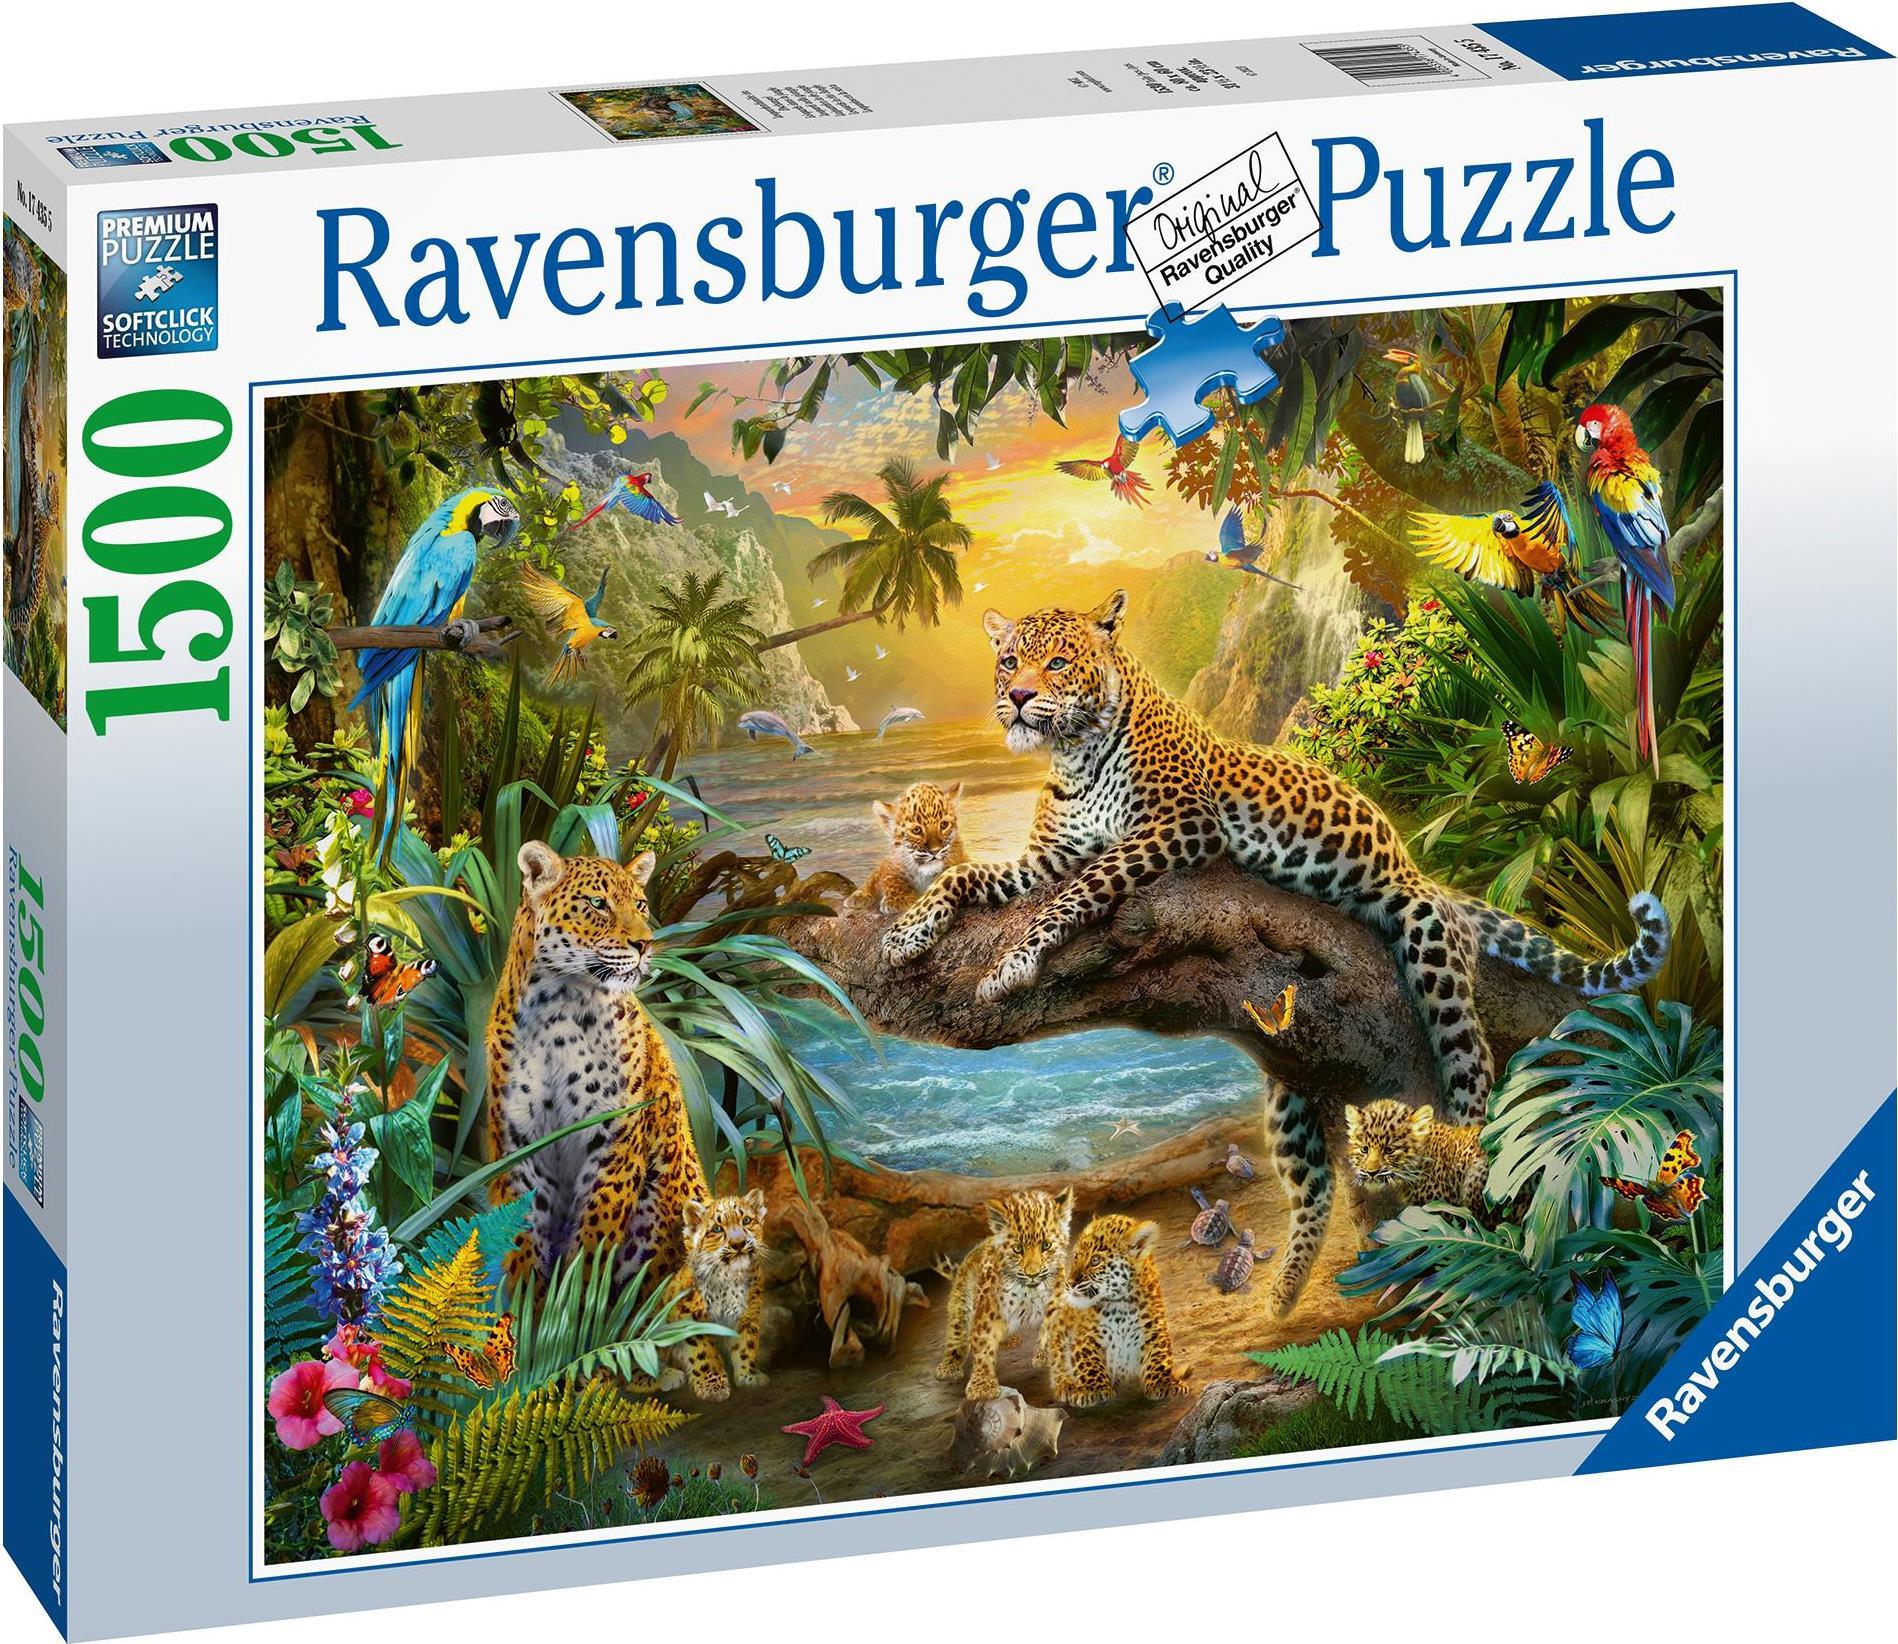 Ravensburger 17435 Puzzle Puzzlespiel 1500 Stück(e) Tiere (17435)